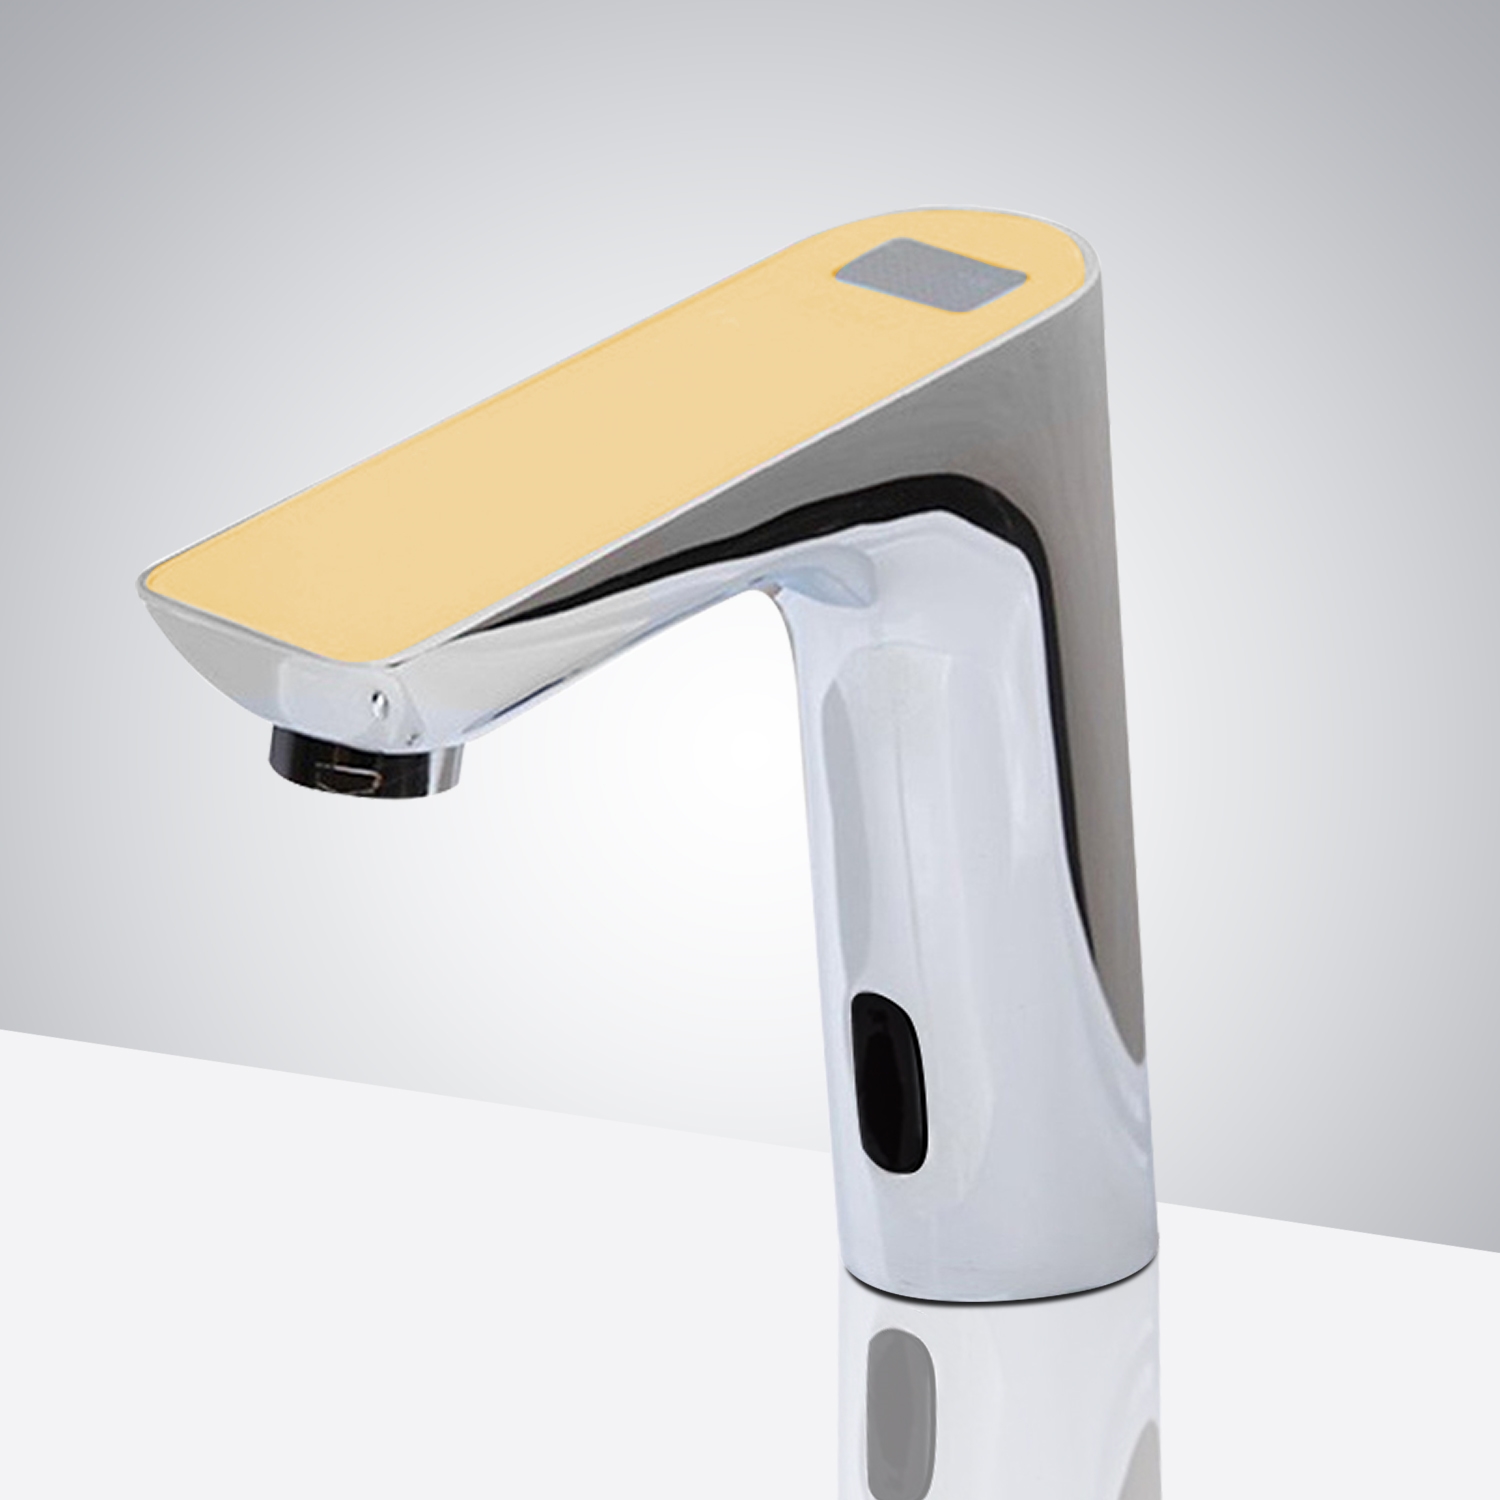 Juno Digital Display Bathroom Commercial Automatic Hands Free Sensor Faucet Brass Sink Mixer Tap Faucets,Mixers & Taps